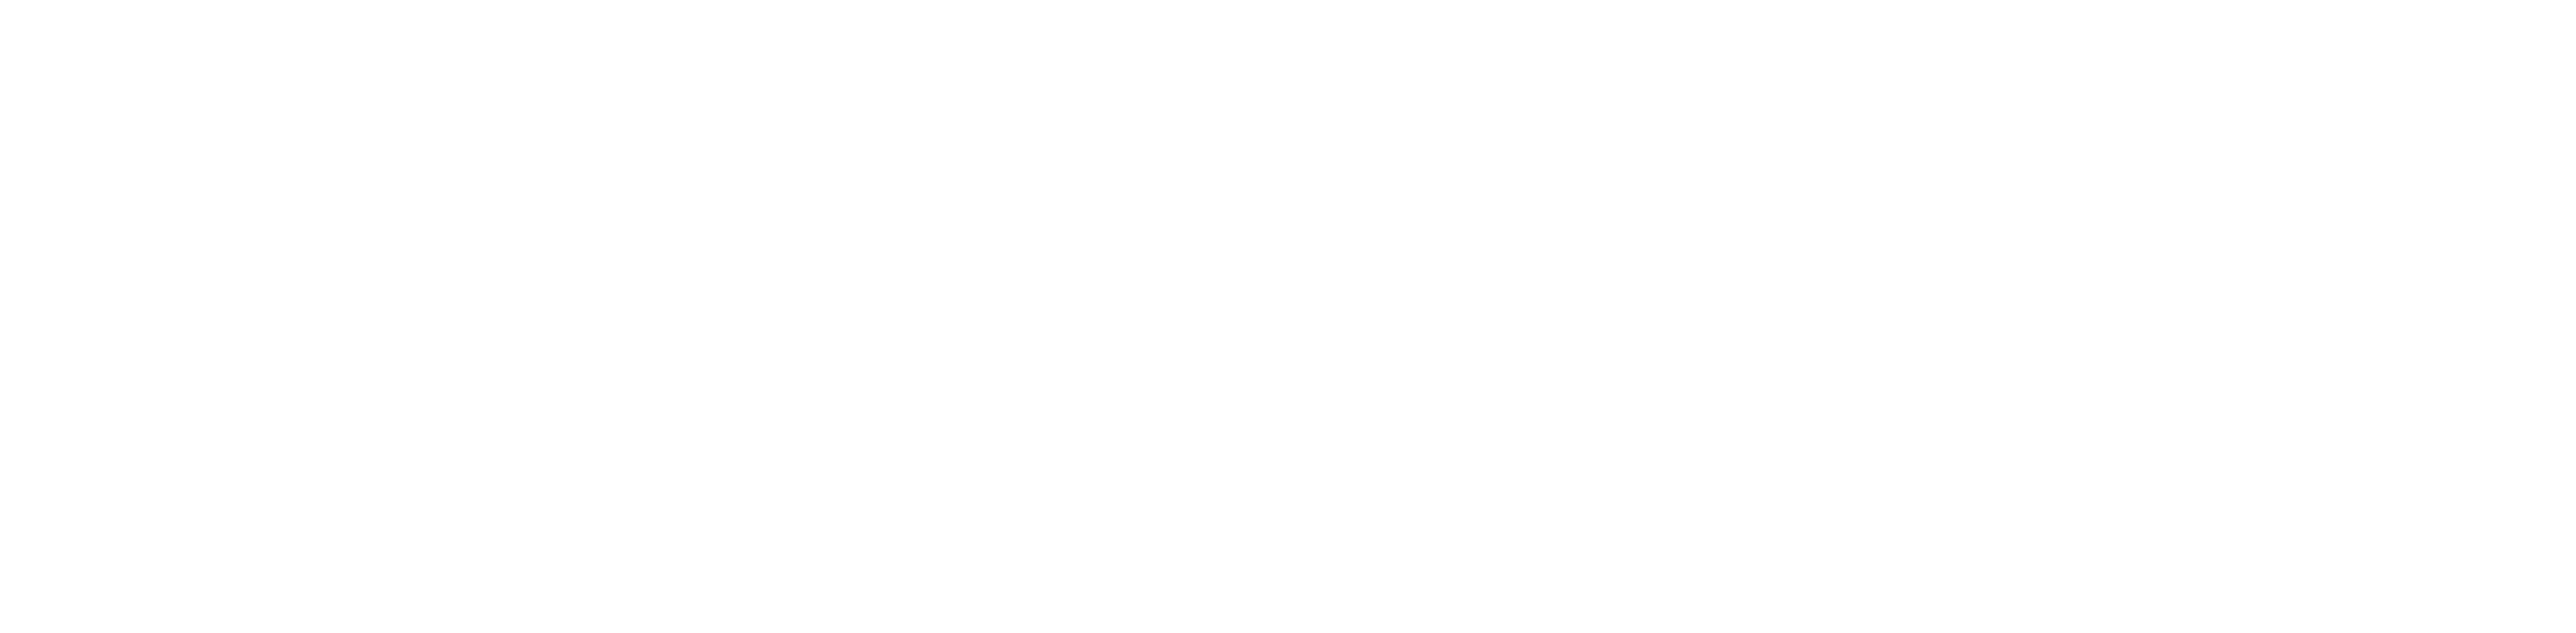 b2b marketing conference in sydney australia 2022